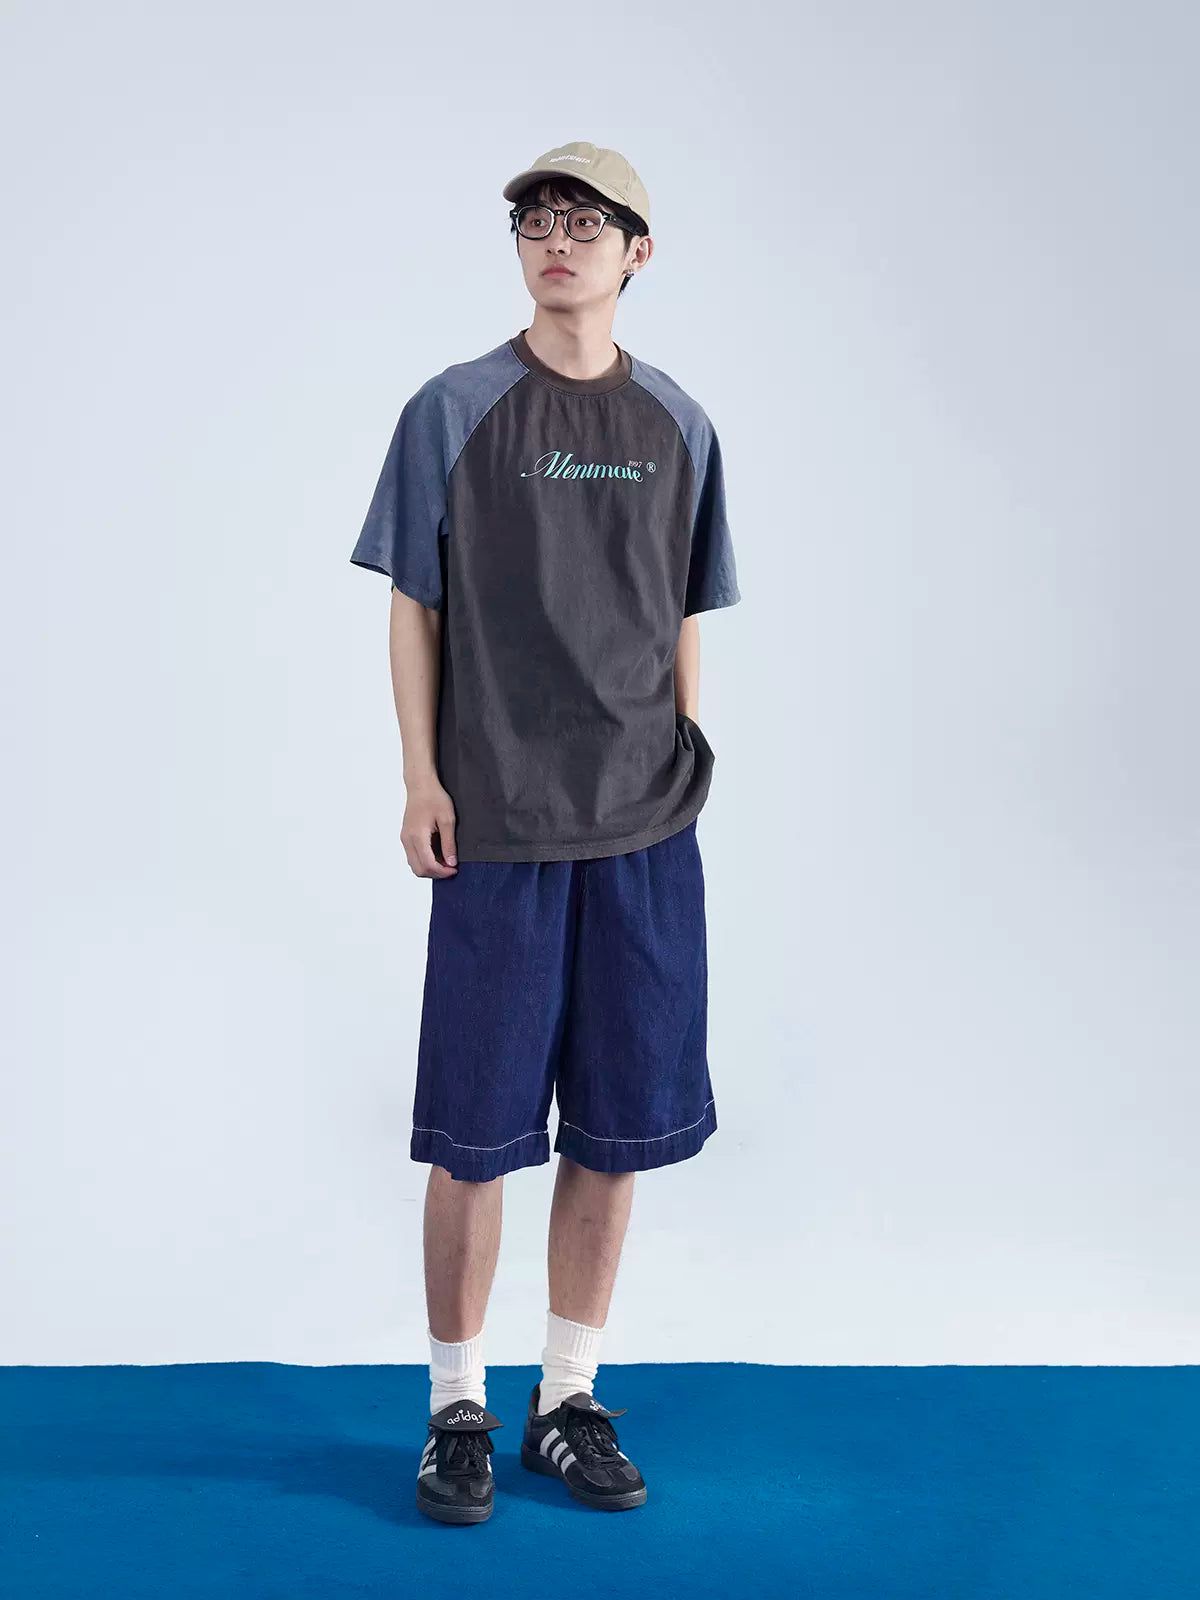 Basic Fit Raglan T-Shirt Korean Street Fashion T-Shirt By Mentmate Shop Online at OH Vault